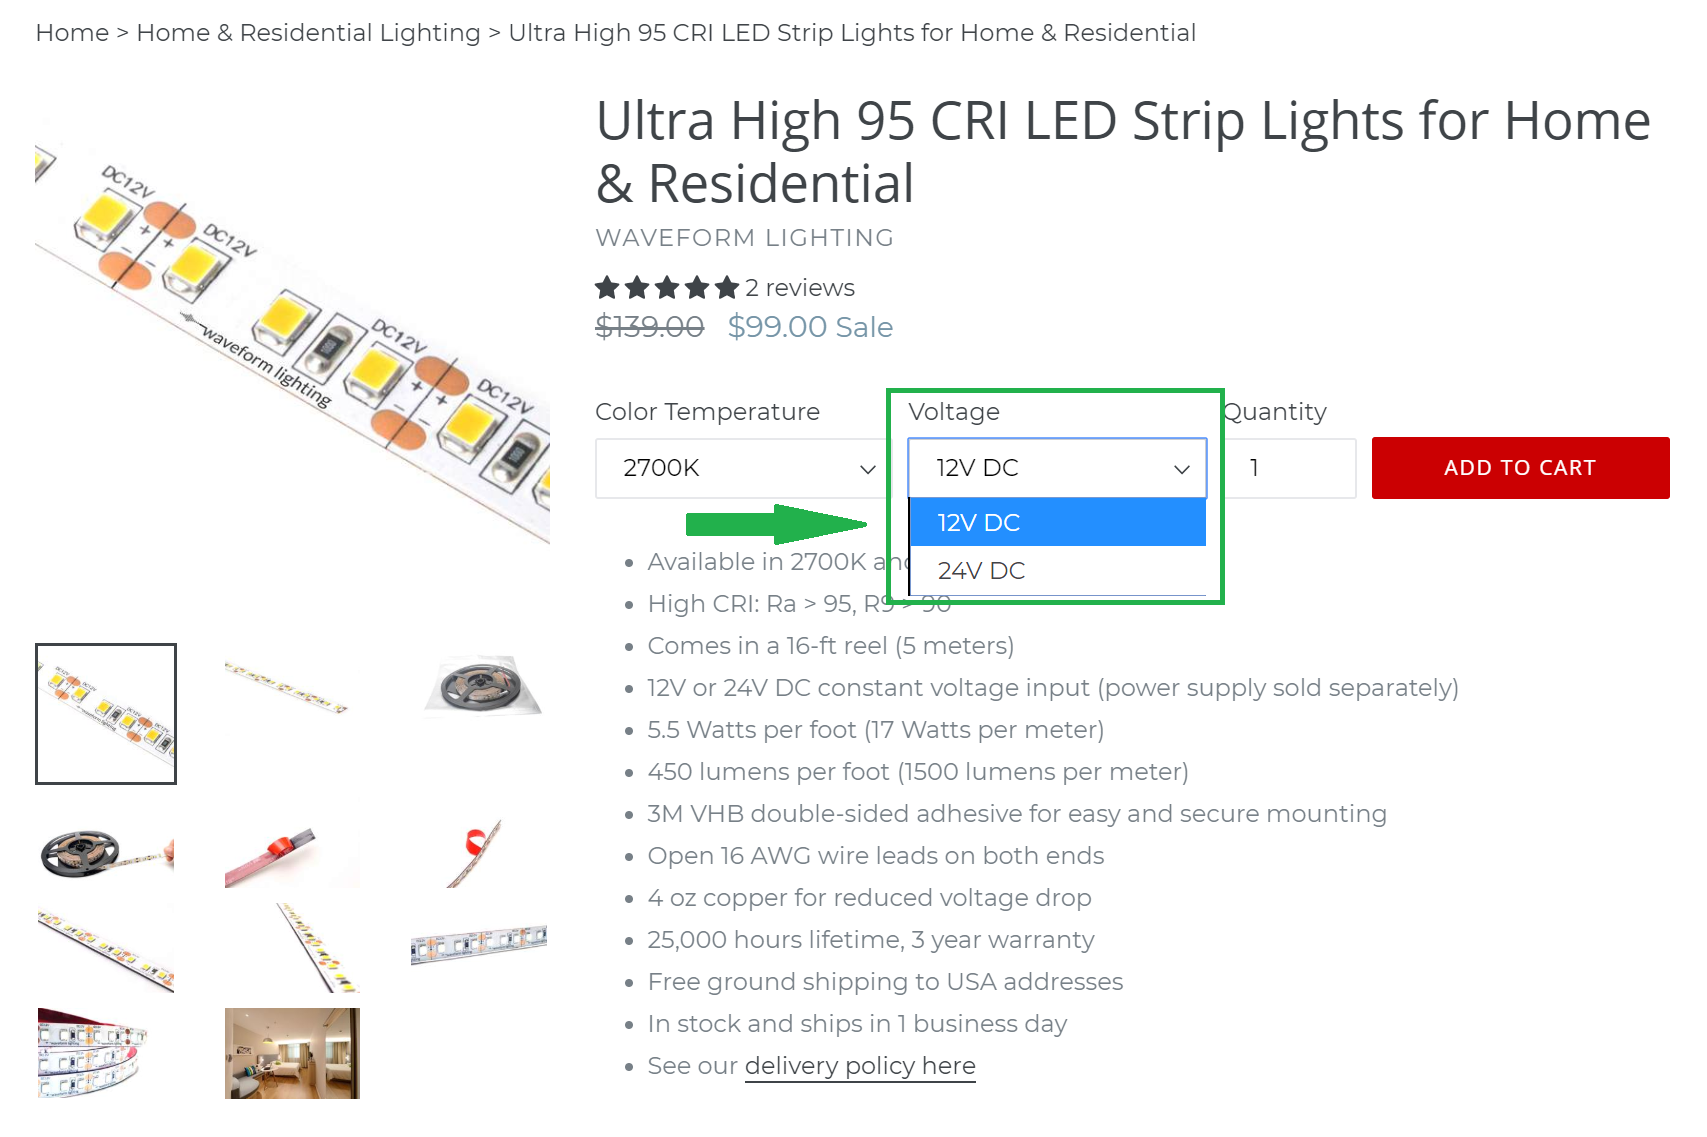 Advantages of a 24V LED system vs 12V